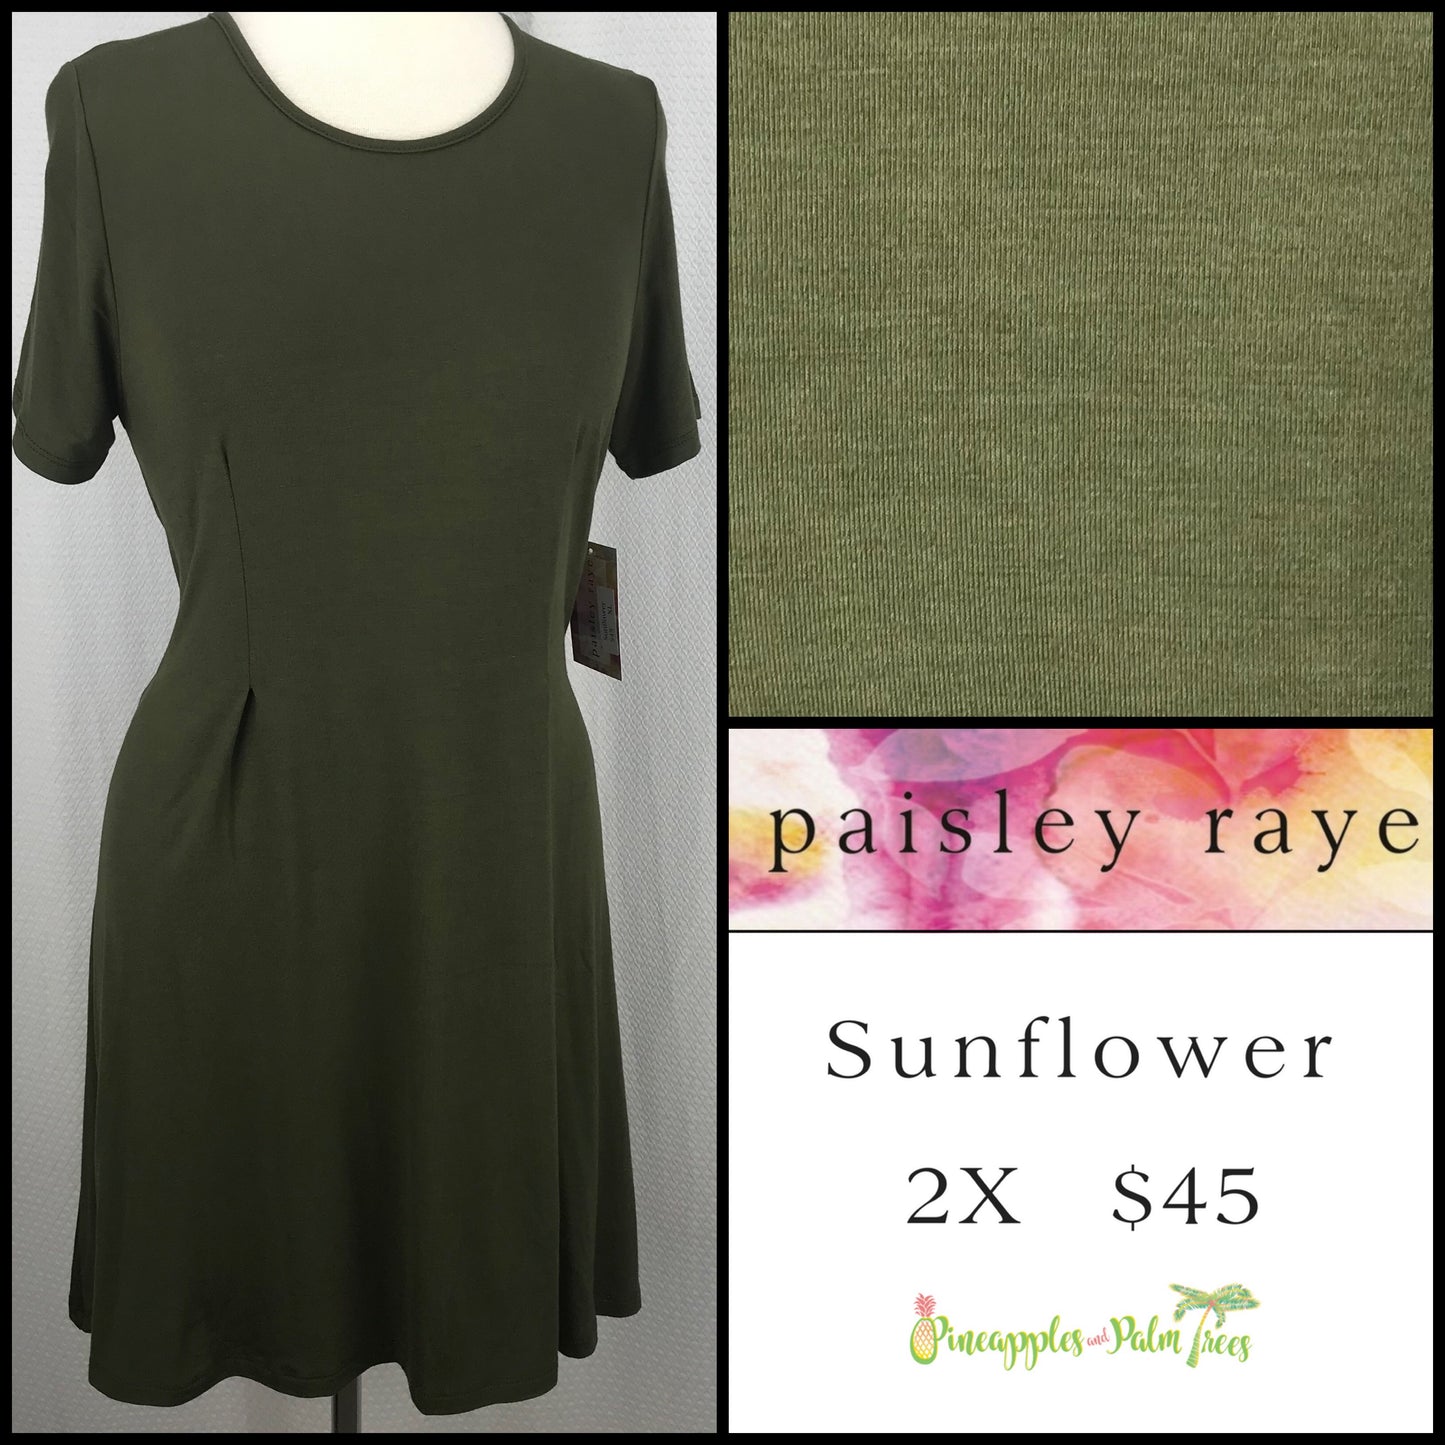 Dress: Sunflower 2X - olive